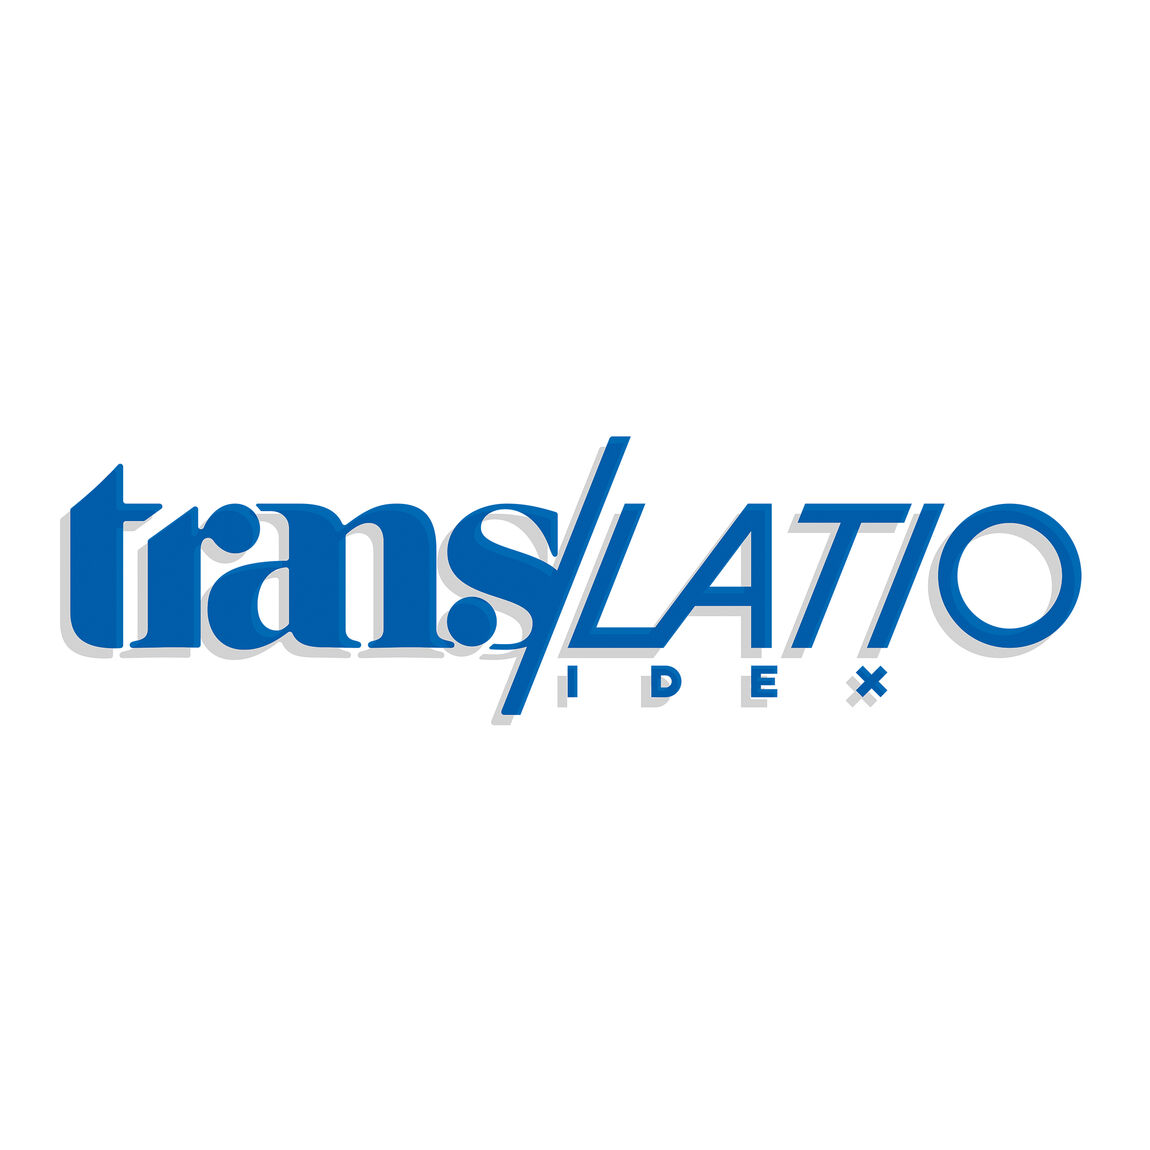 Logo Translatio